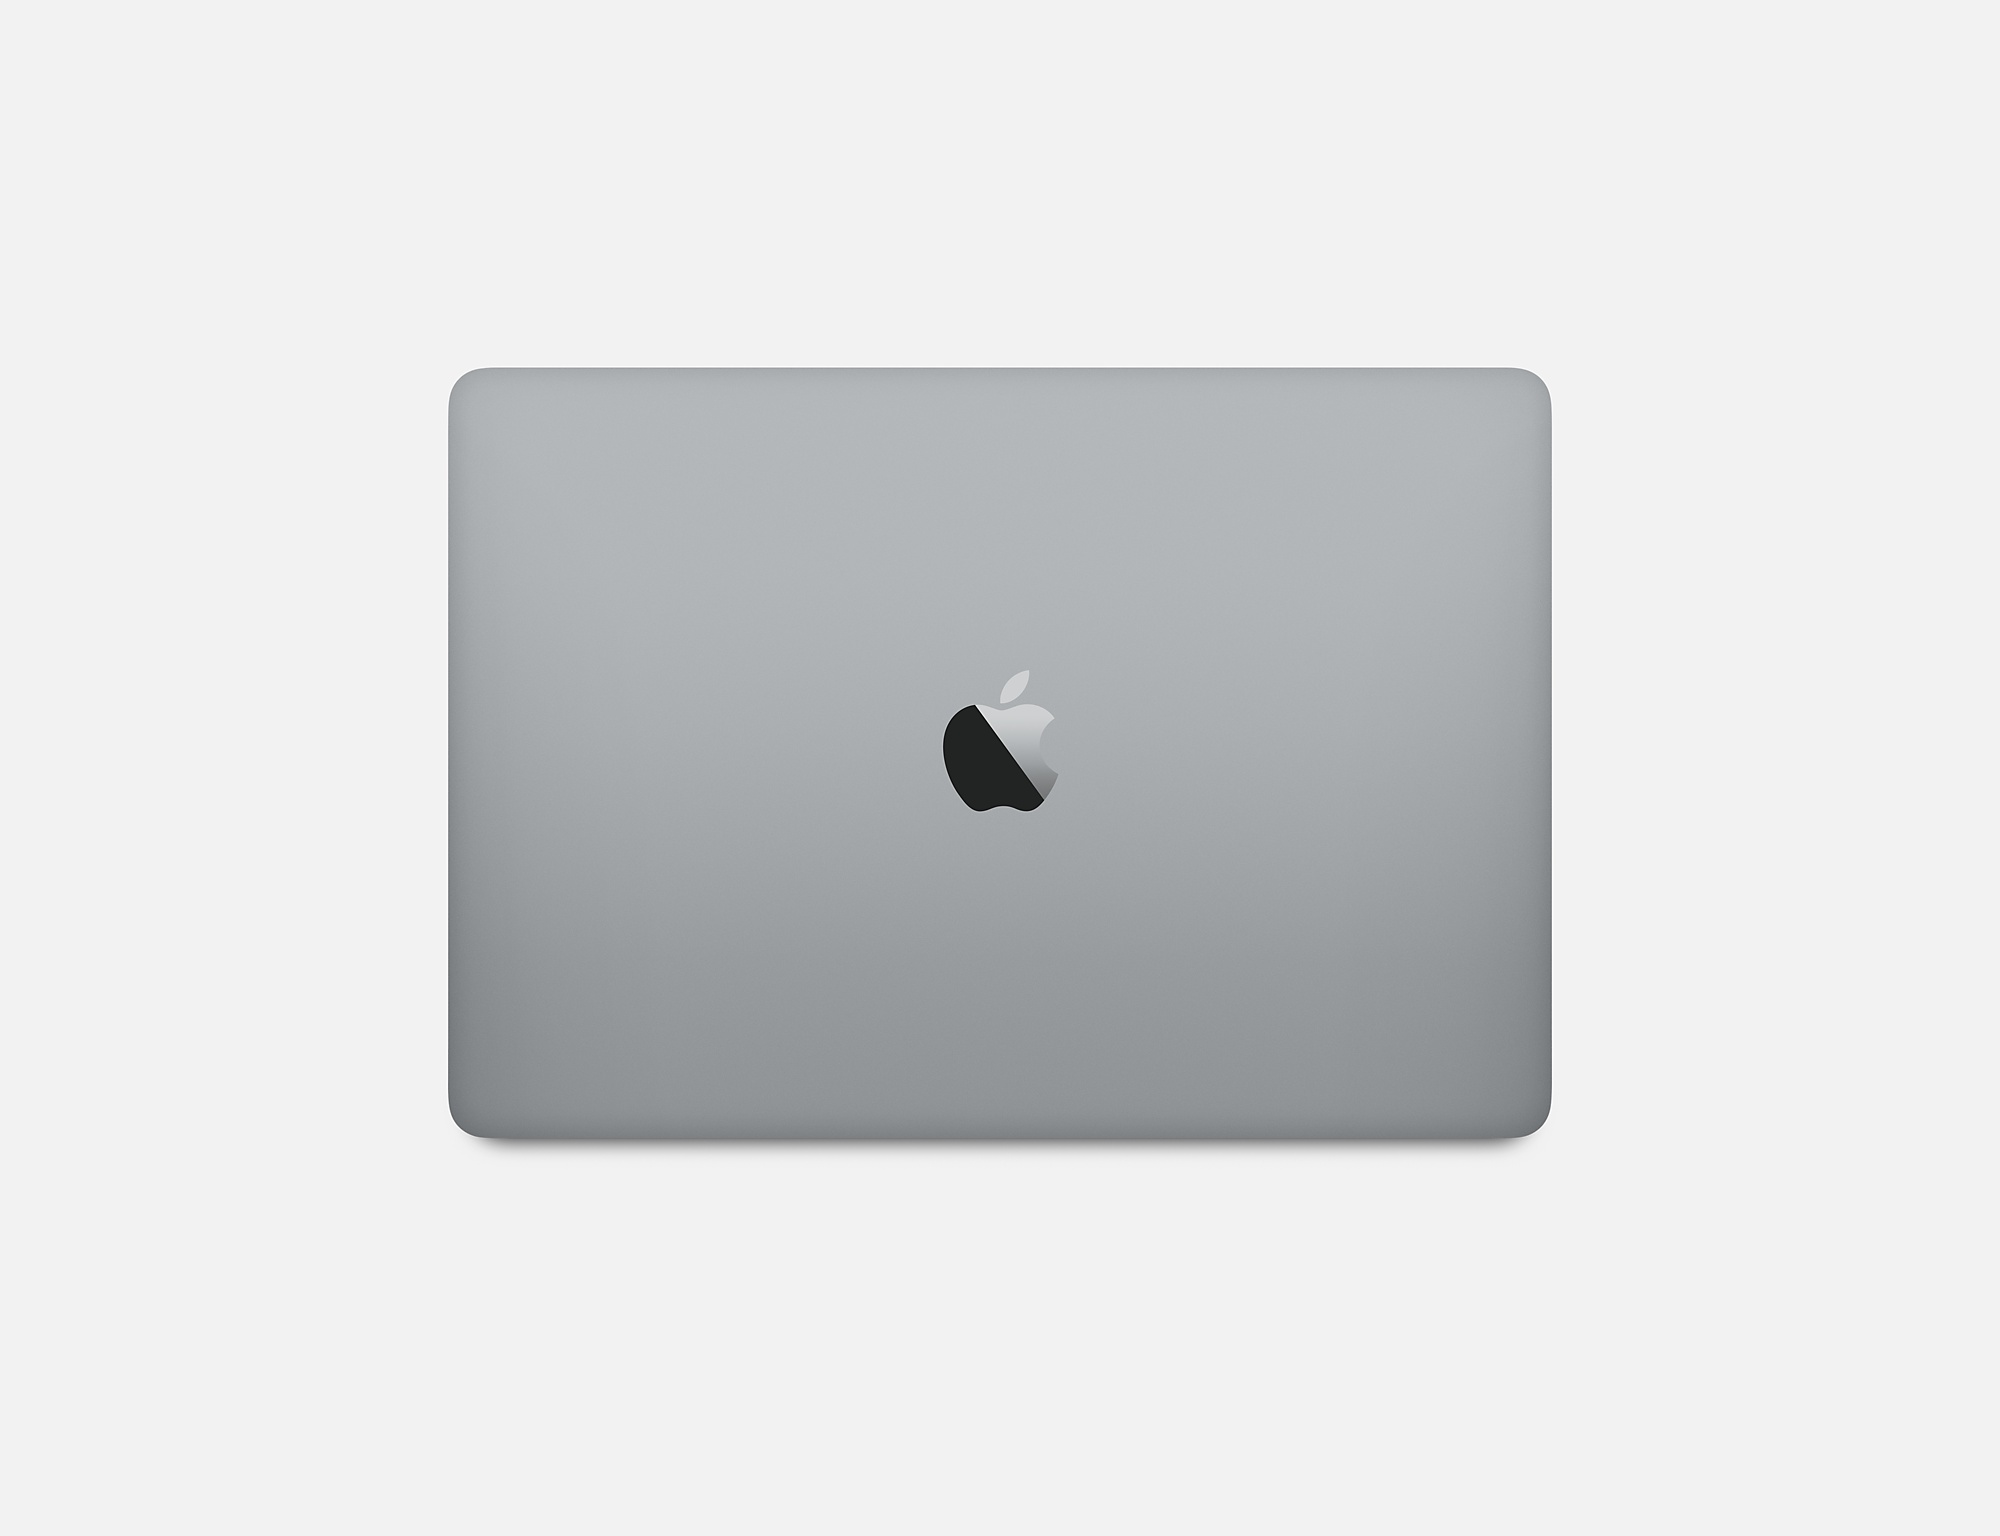 http://www.apple.com/jp/shop/buy-mac/macbook-pro?product=MNQF2J/A&step=config#